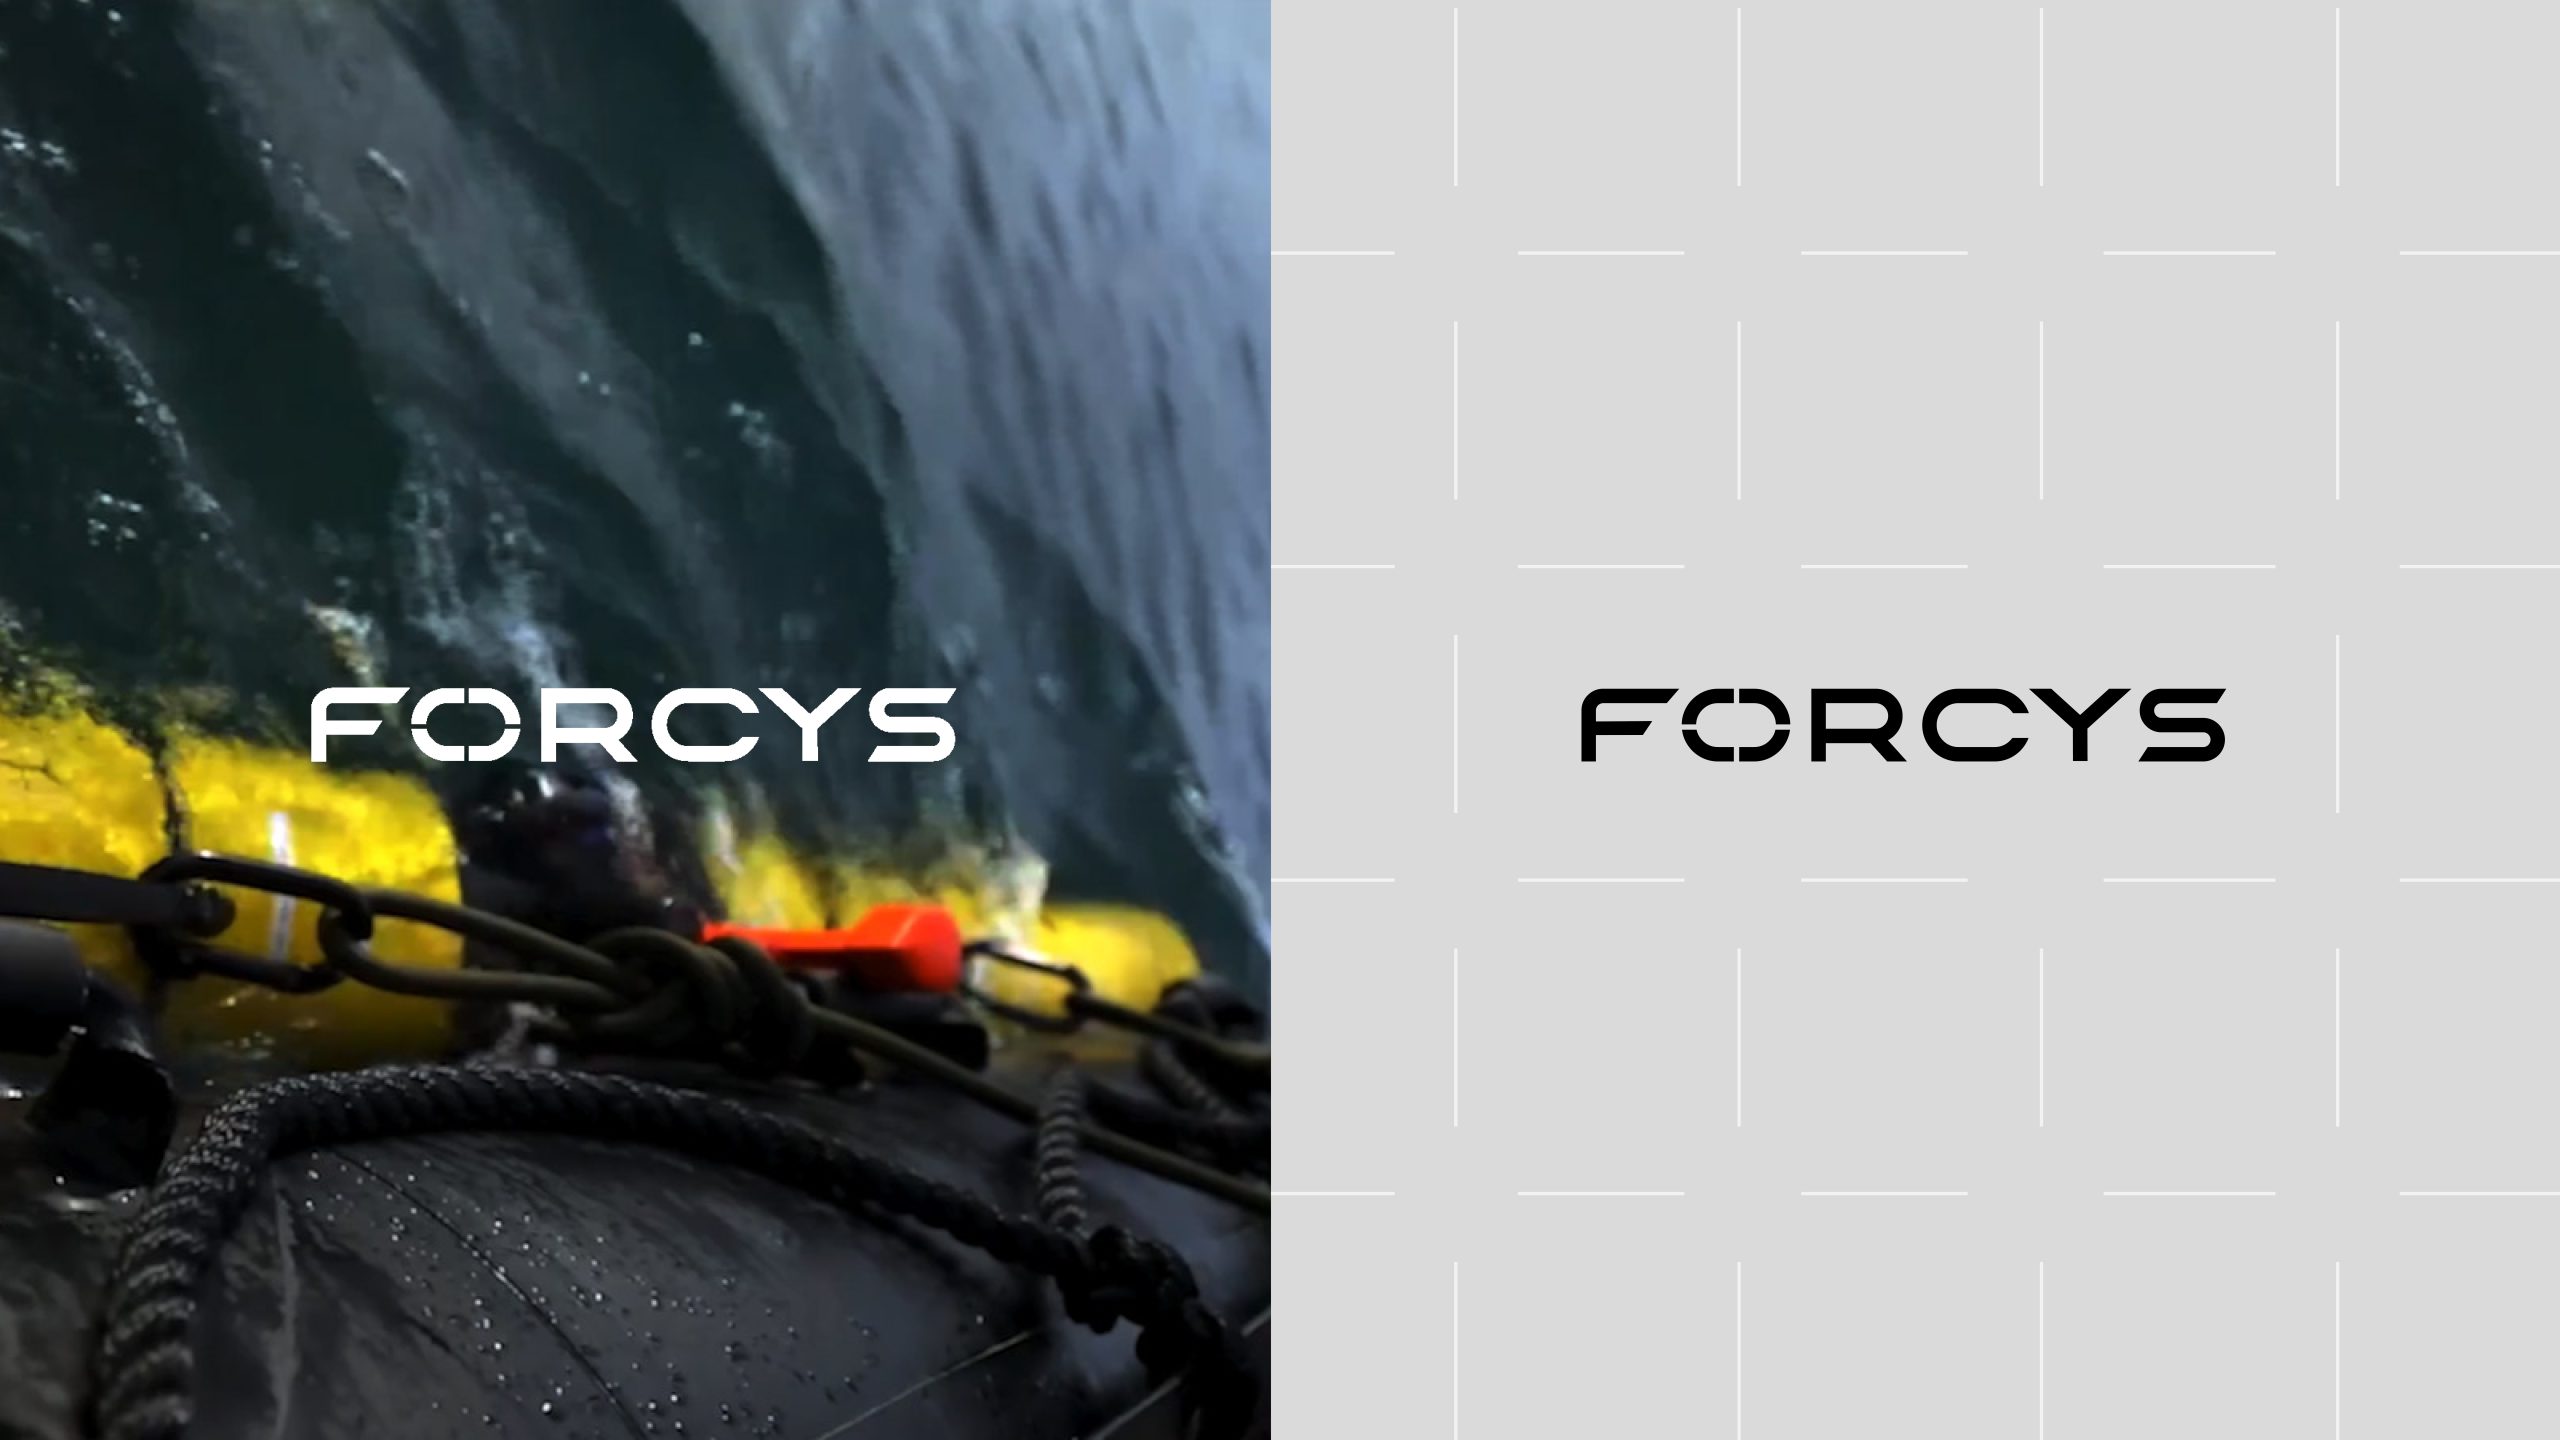 Forcys Logos on Grid & Image